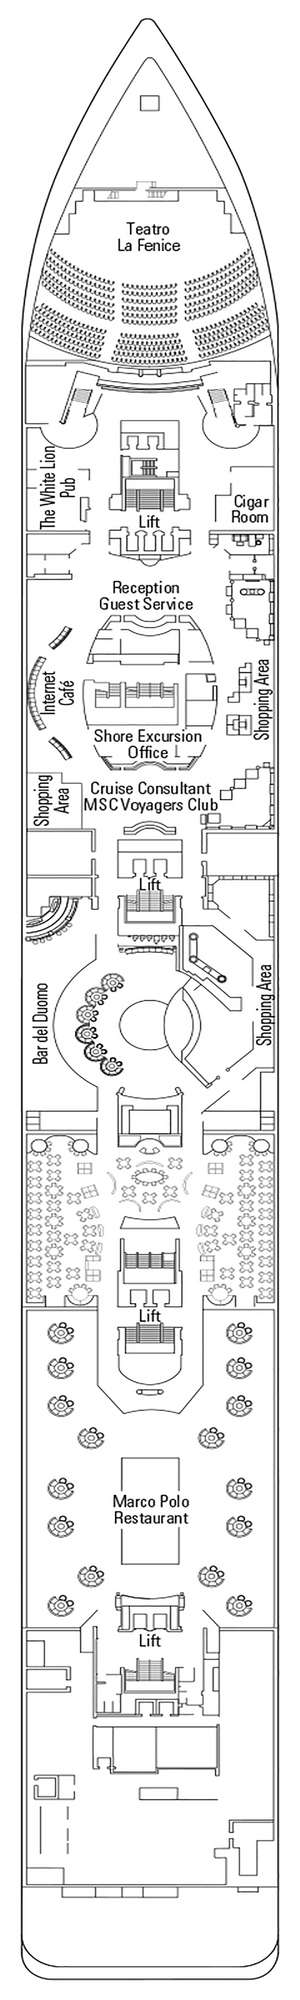 Deck plan for MSC Armonia